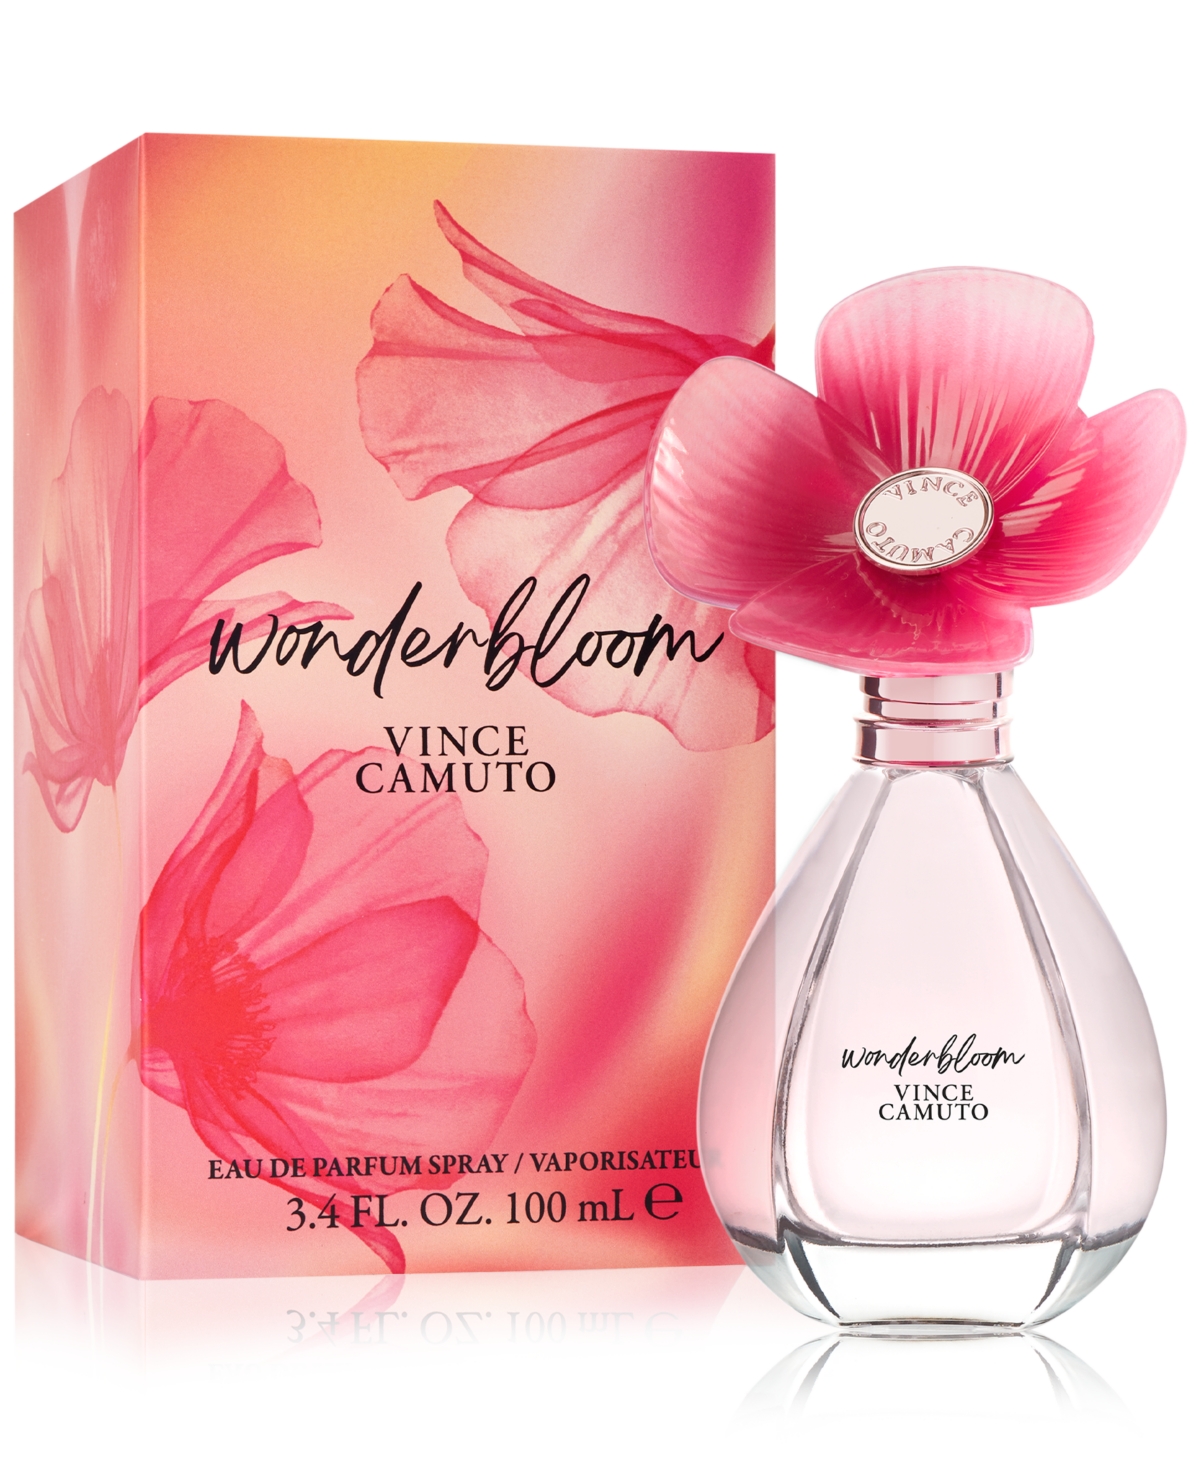 Wonderbloom Eau de Parfum, 3.4 oz.